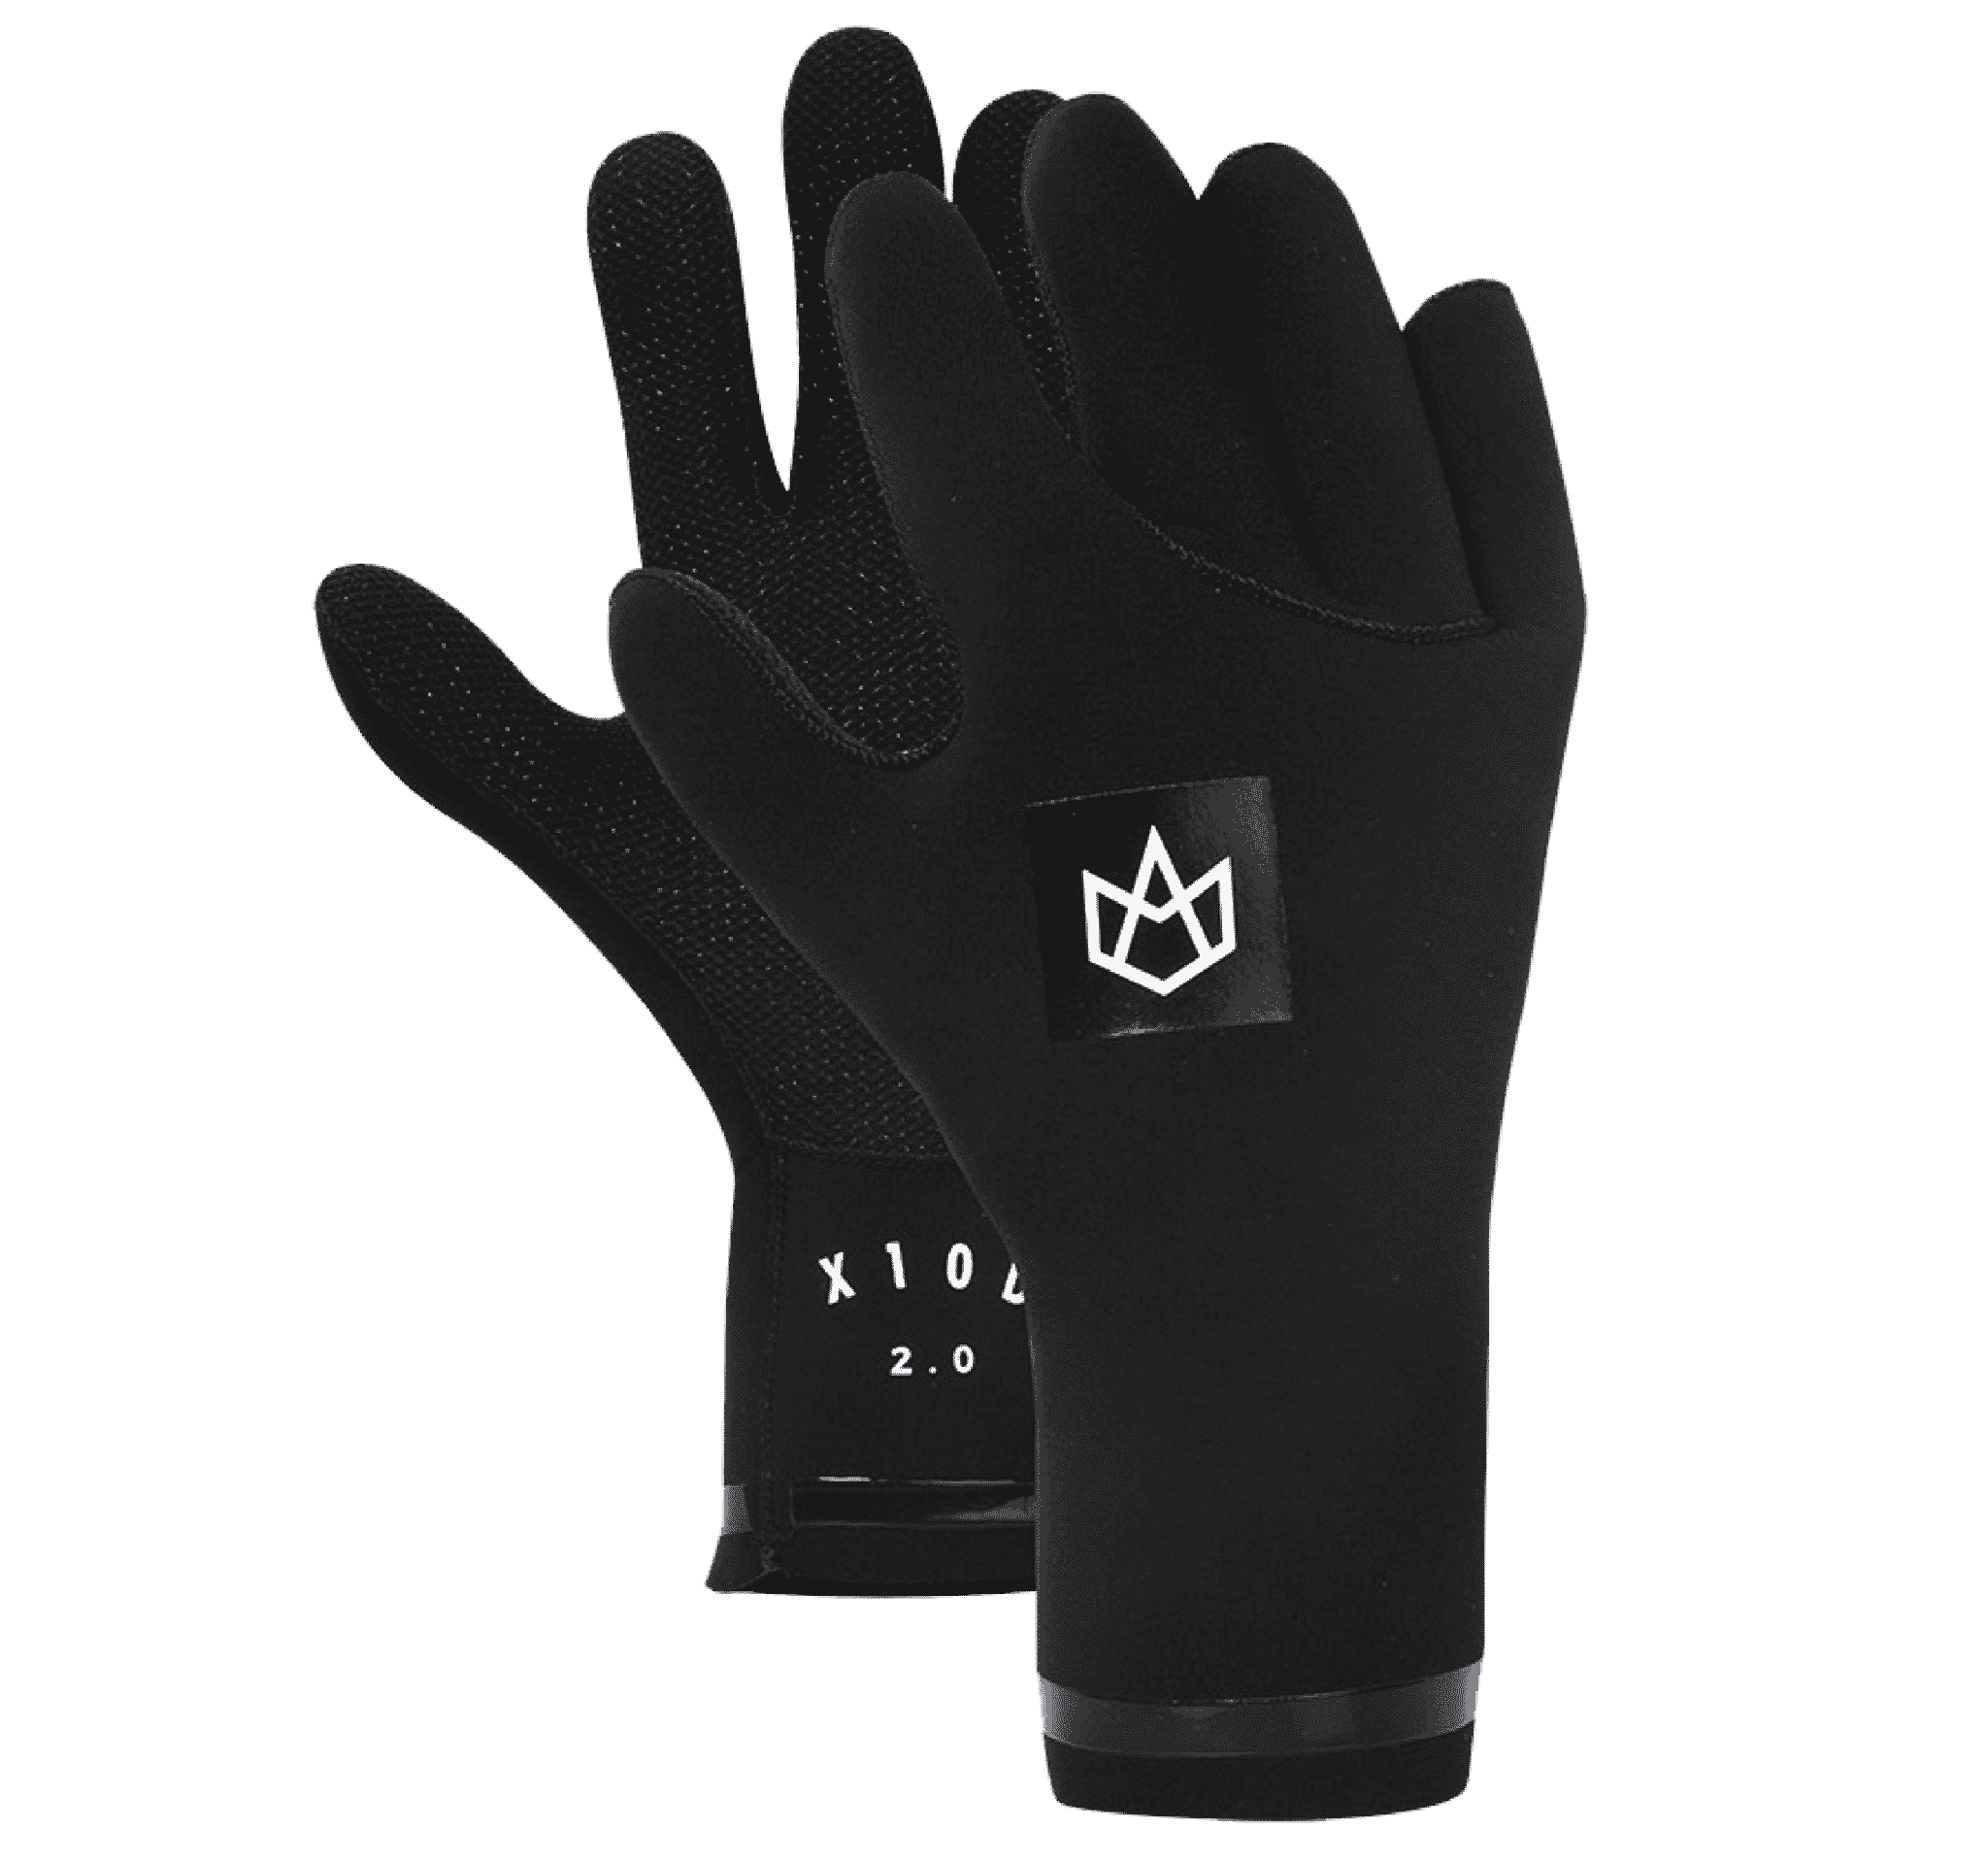 Manera X10D Glove 2 mm